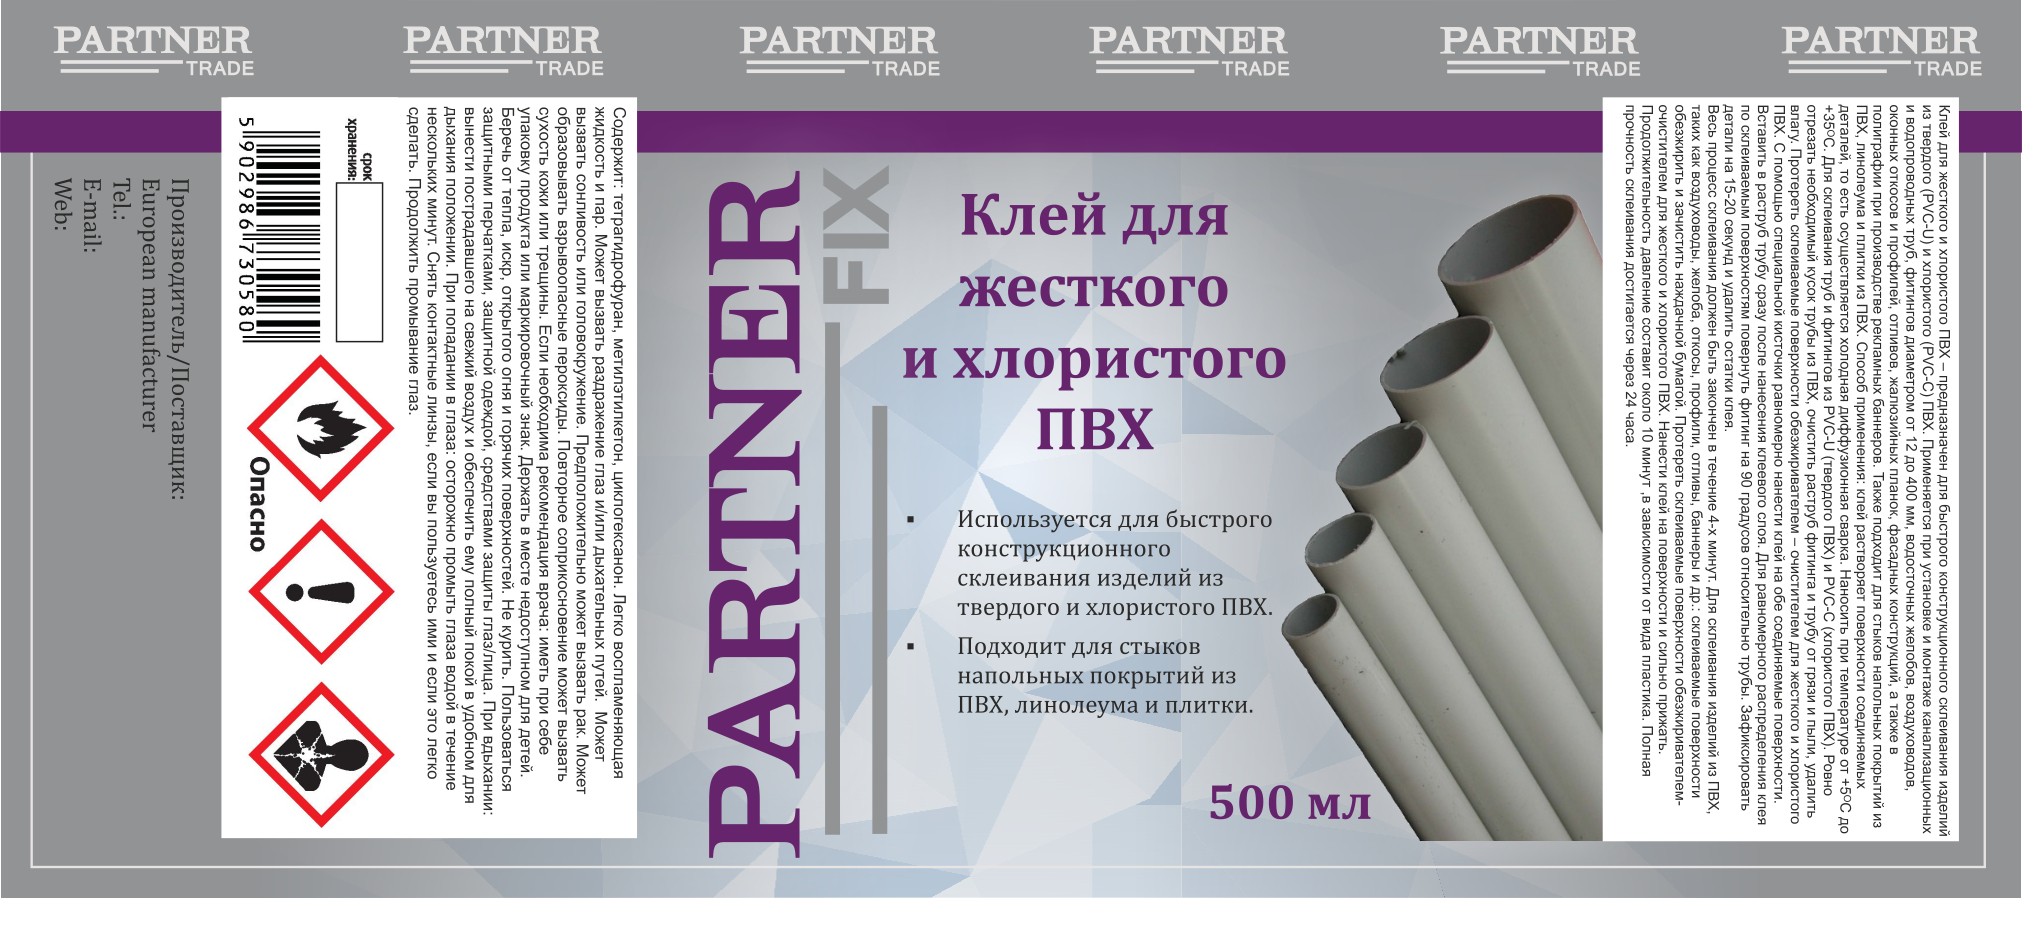 partner_fix_пвх